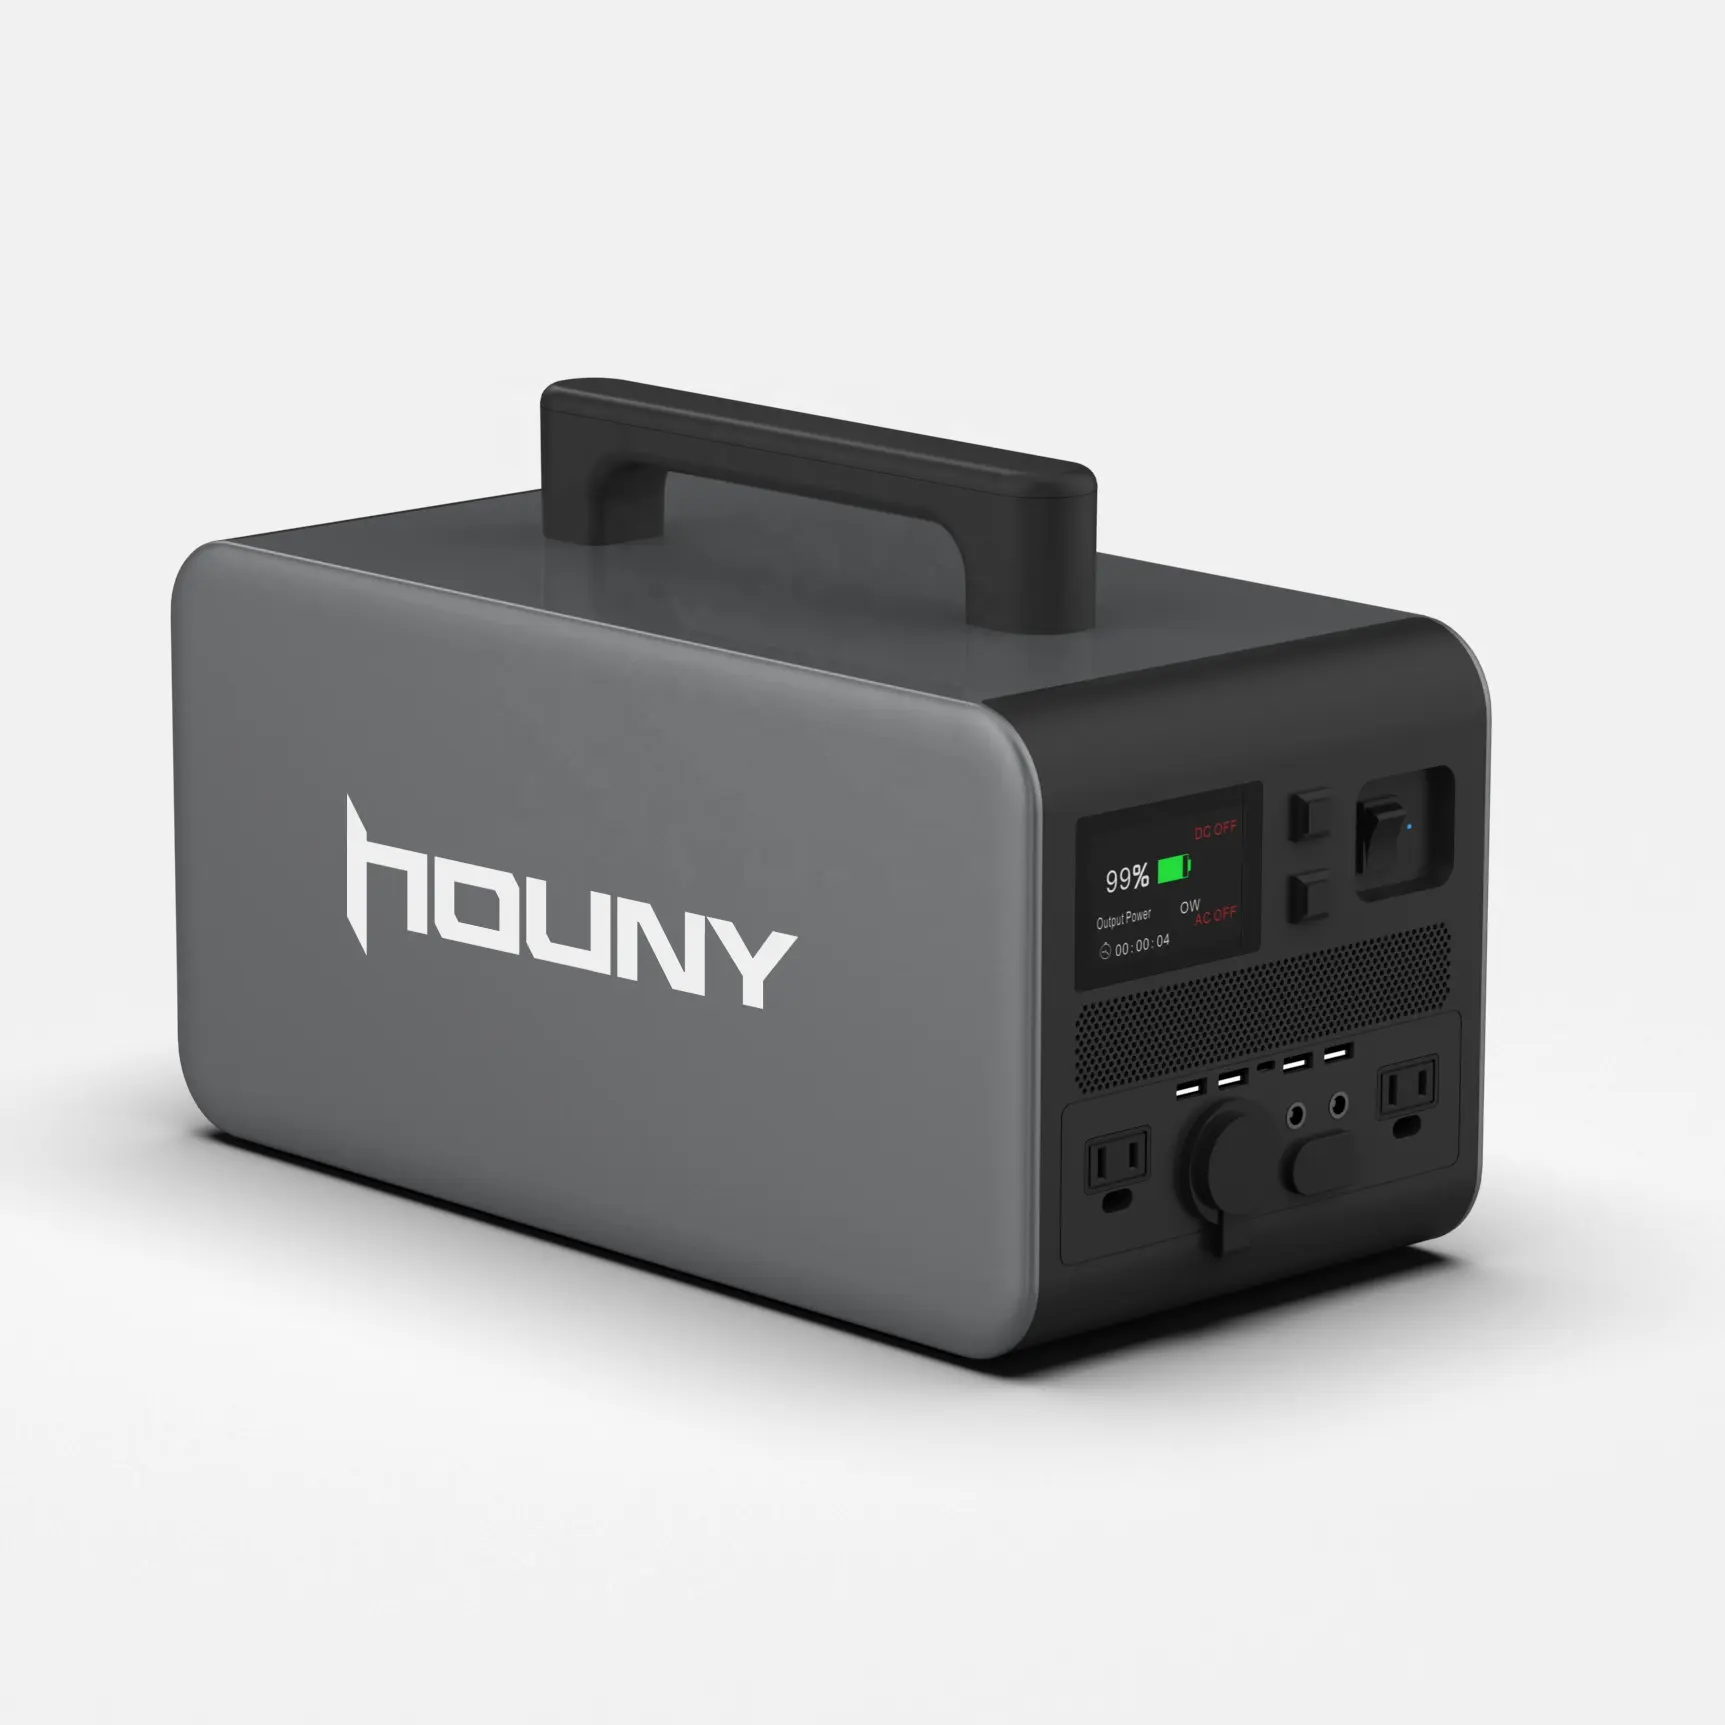 Houny 2019 옥외를 위한 휴대용 전력 공급 사용을 위한 새로운 도착 1080Wh 발전소